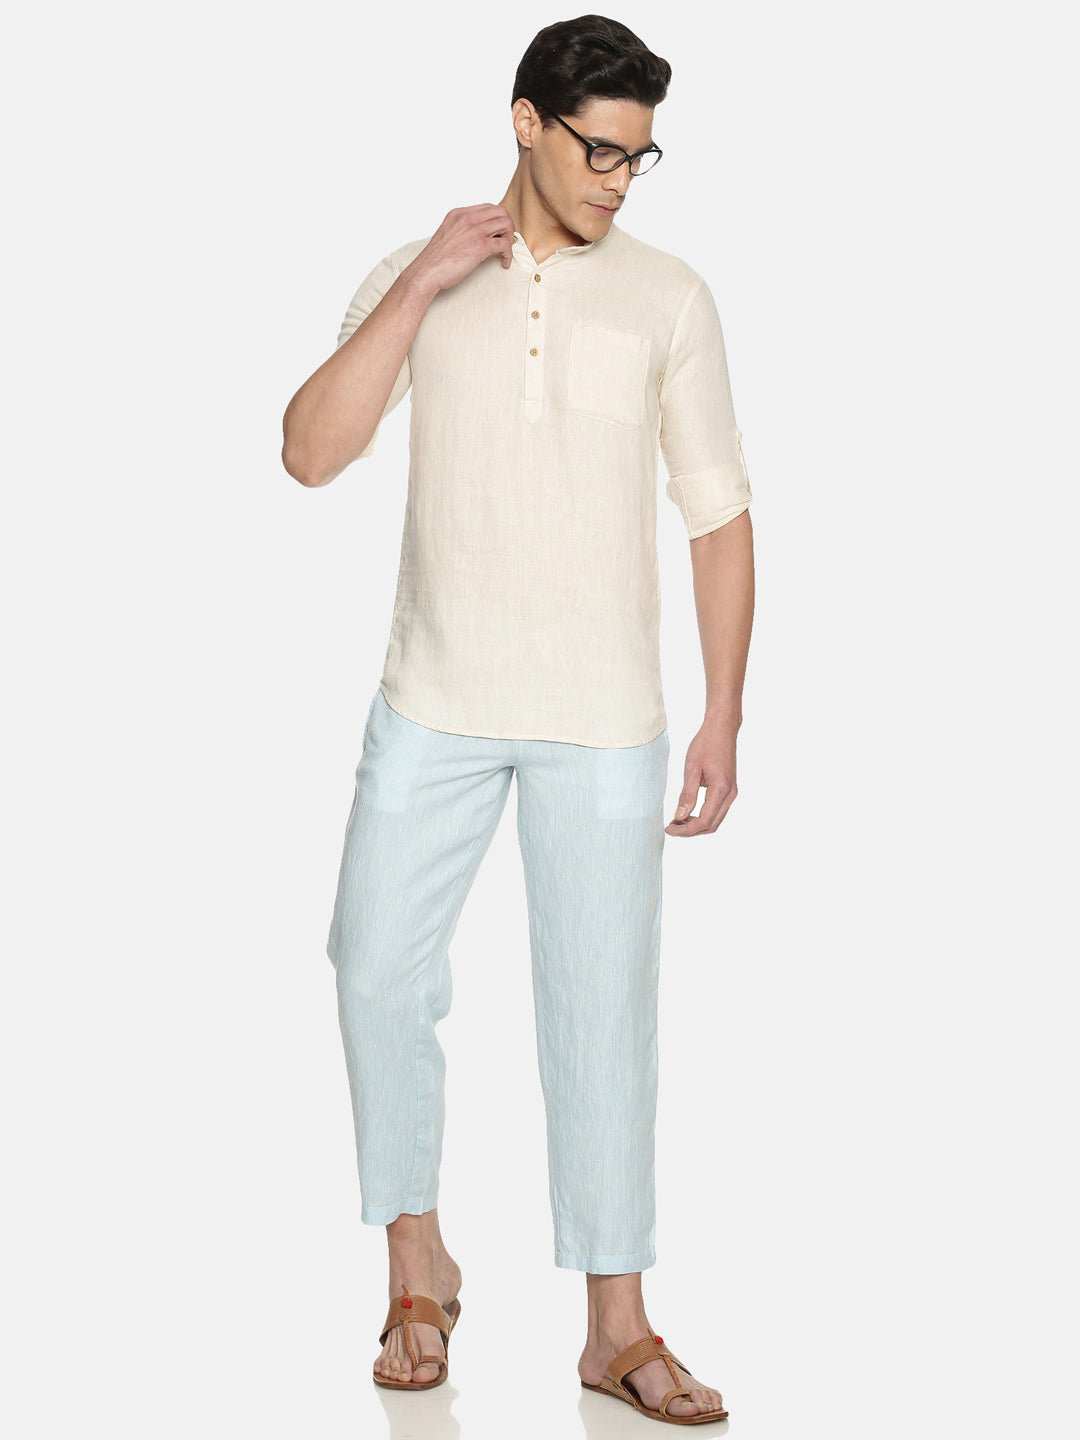 Ecentric Off White Colour Hemp Short Kurta - CBD Store India